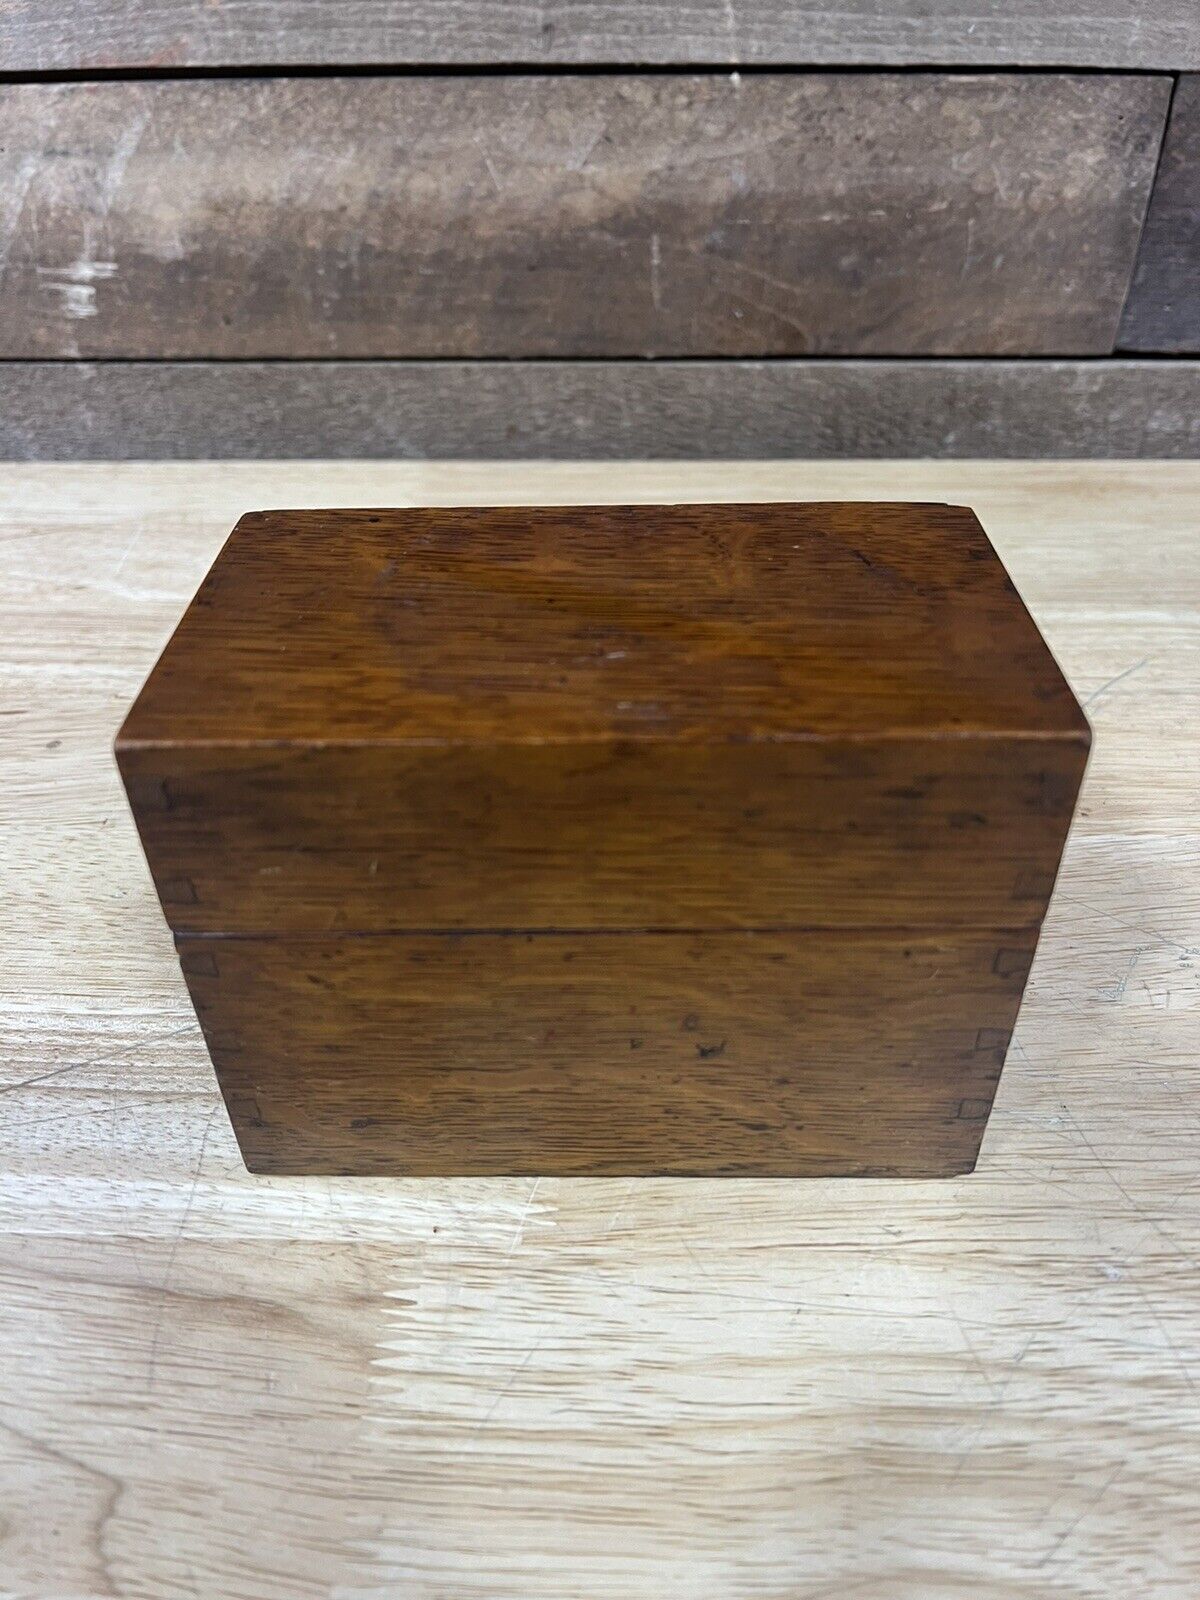 Vintage Small Wooden Jewelry Trinket Box